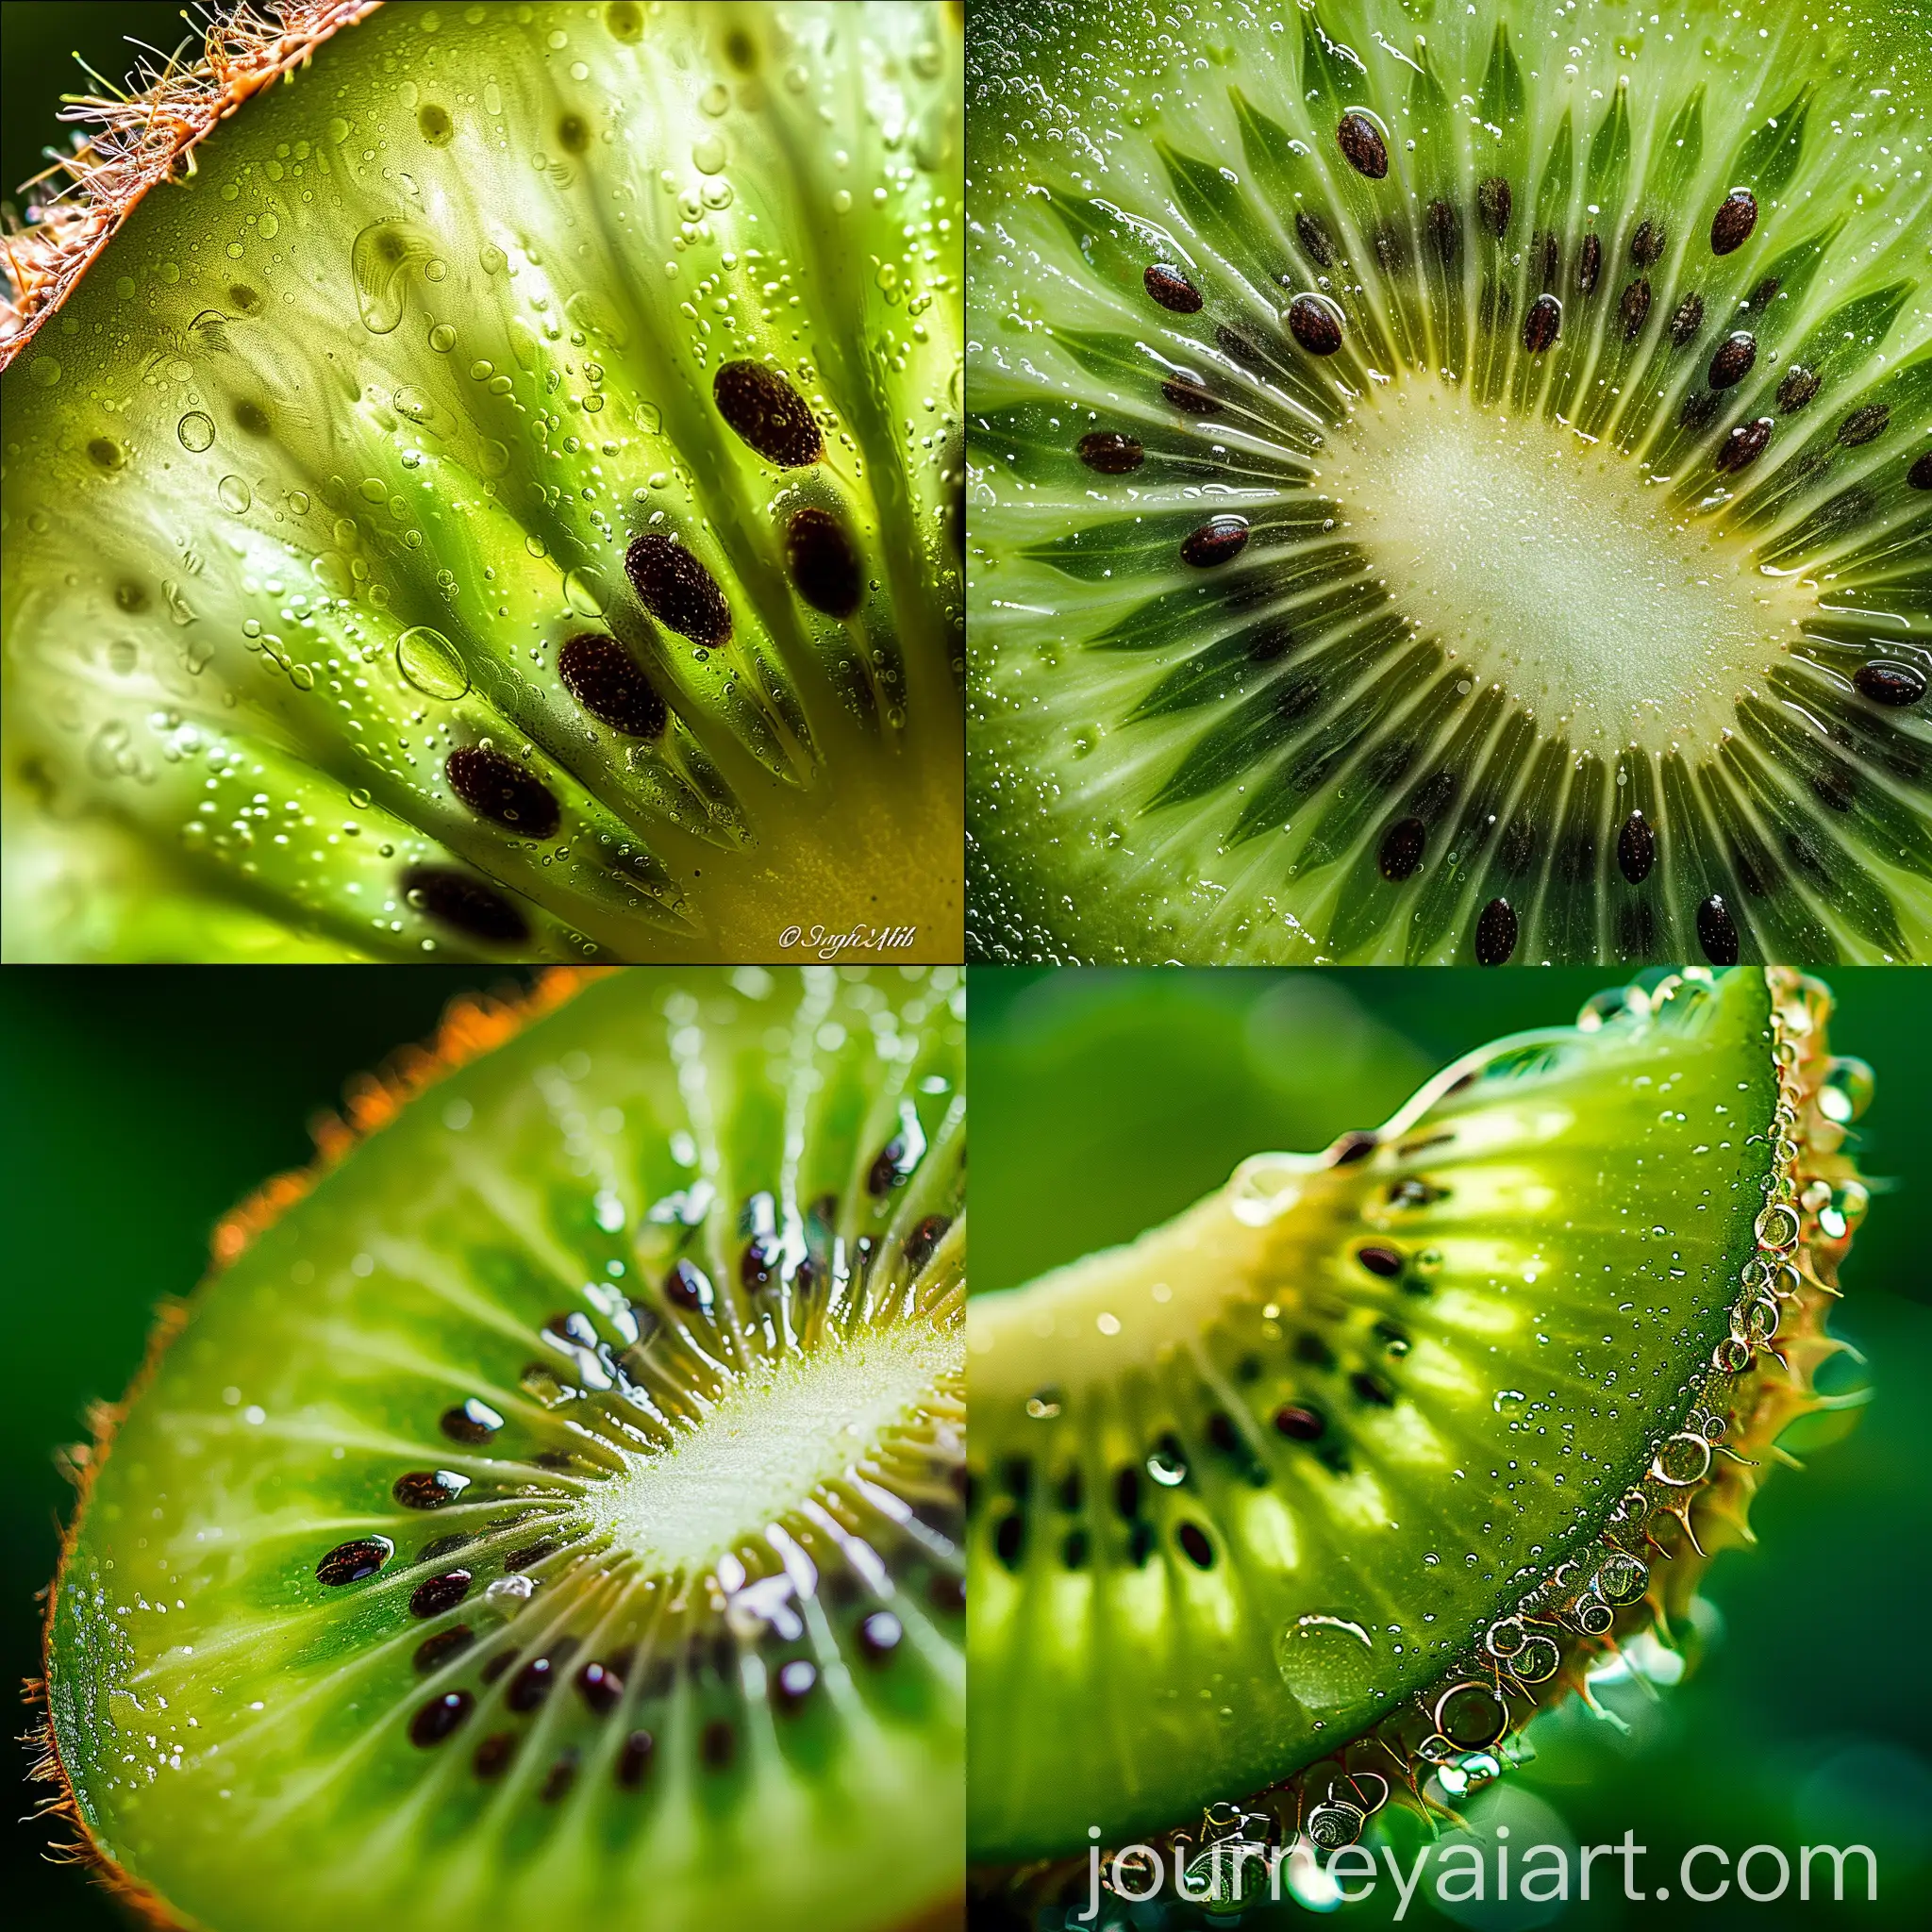 Vibrant-CloseUp-of-Kiwi-Fruit-Slice-HighDefinition-Photograph